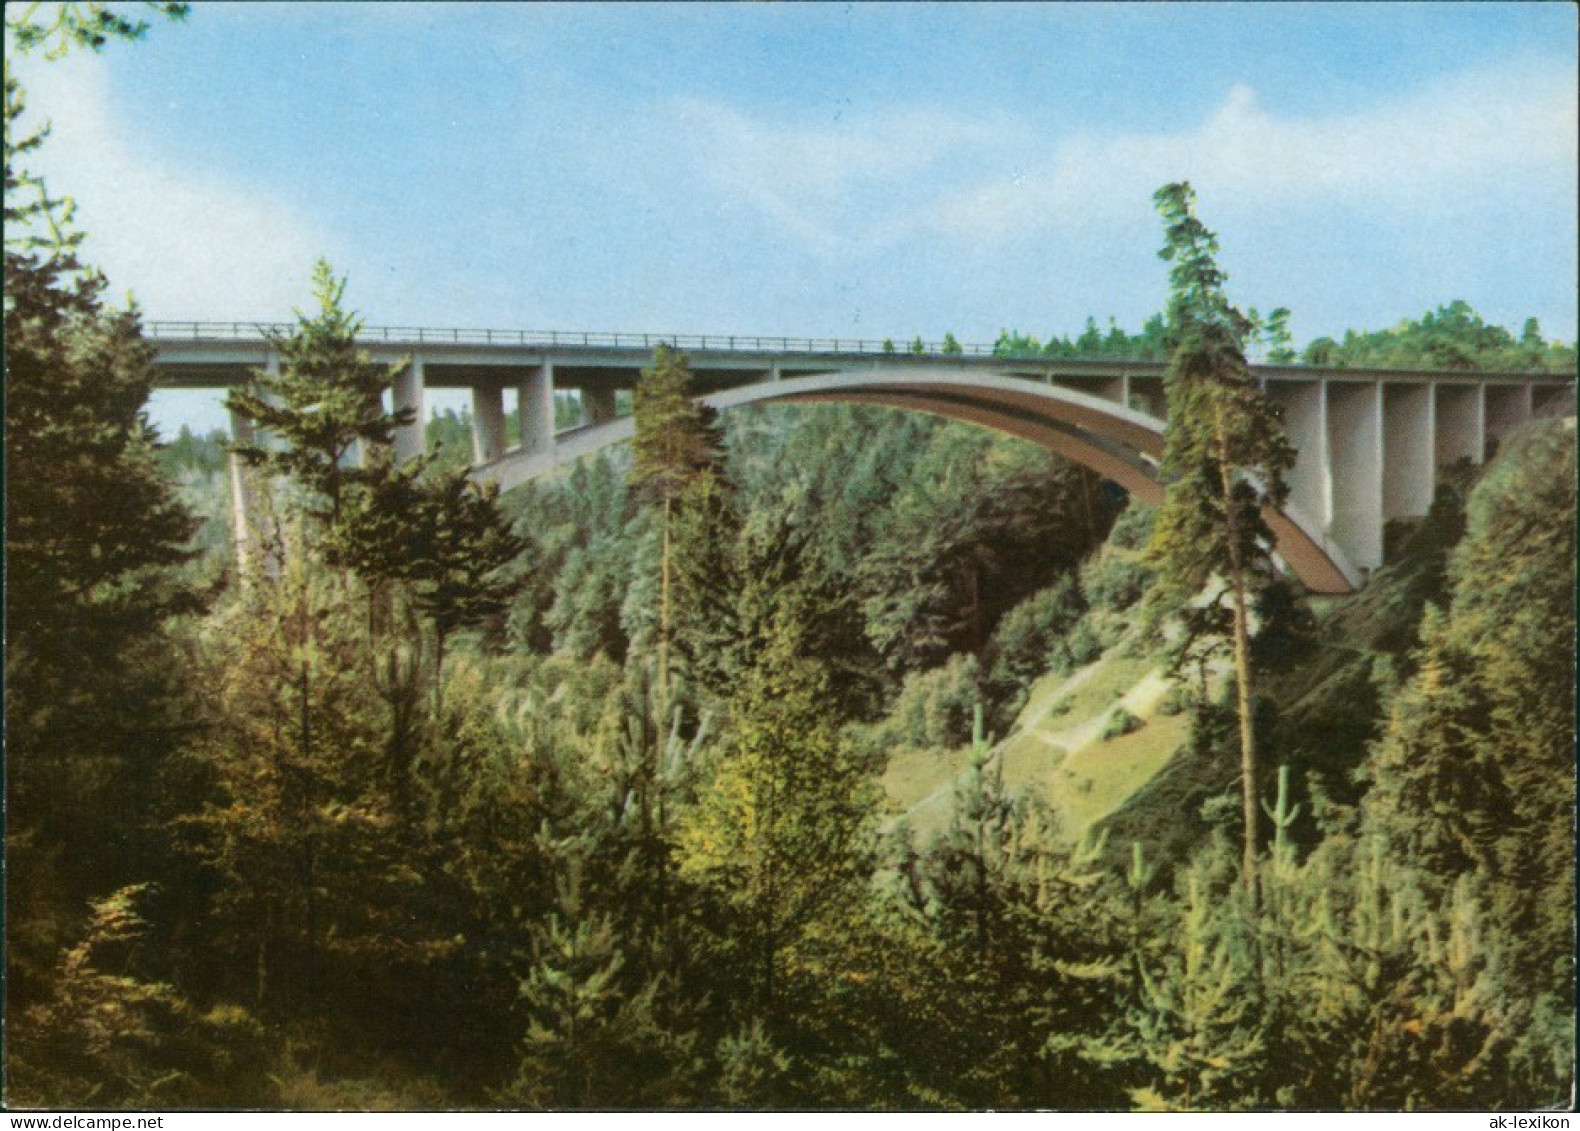 Hermsdorf (Thüringen) Brücke Teufelstal/Teufelstalbrücke 1968/1969 - Hermsdorf